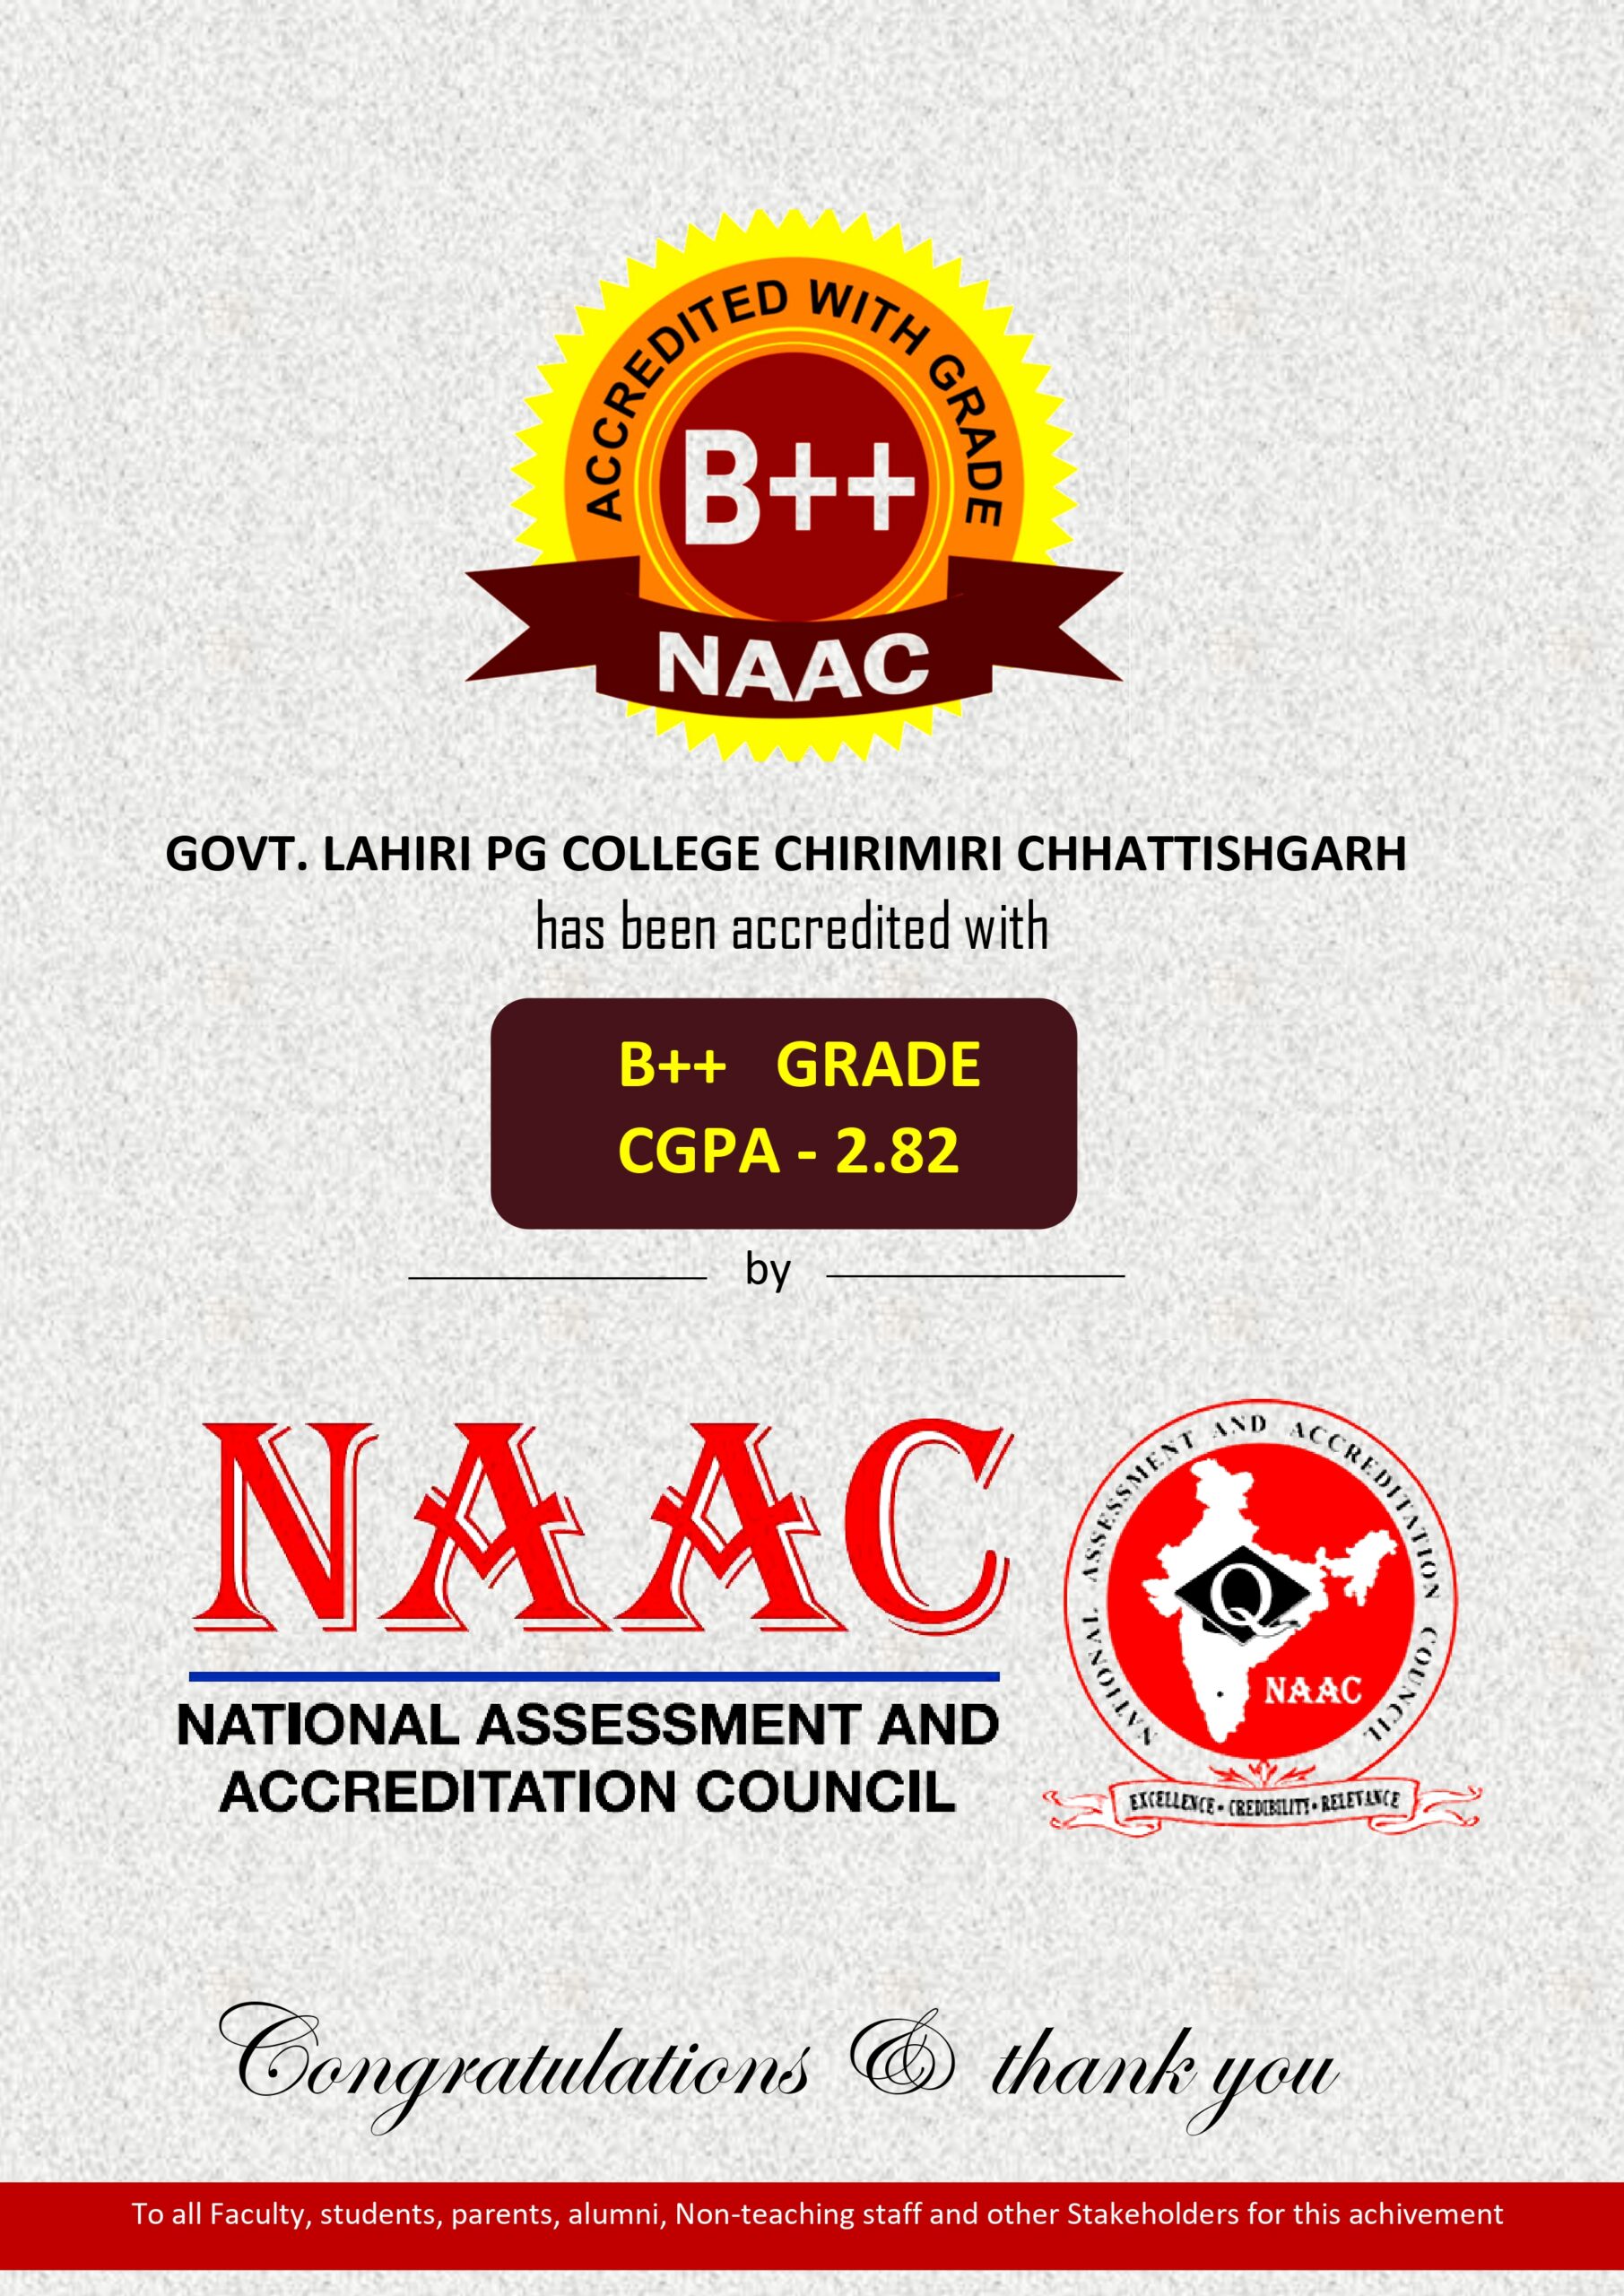 NAAC GURU: NAAC Consultancy at best price in Jaipur | ID: 21576334662